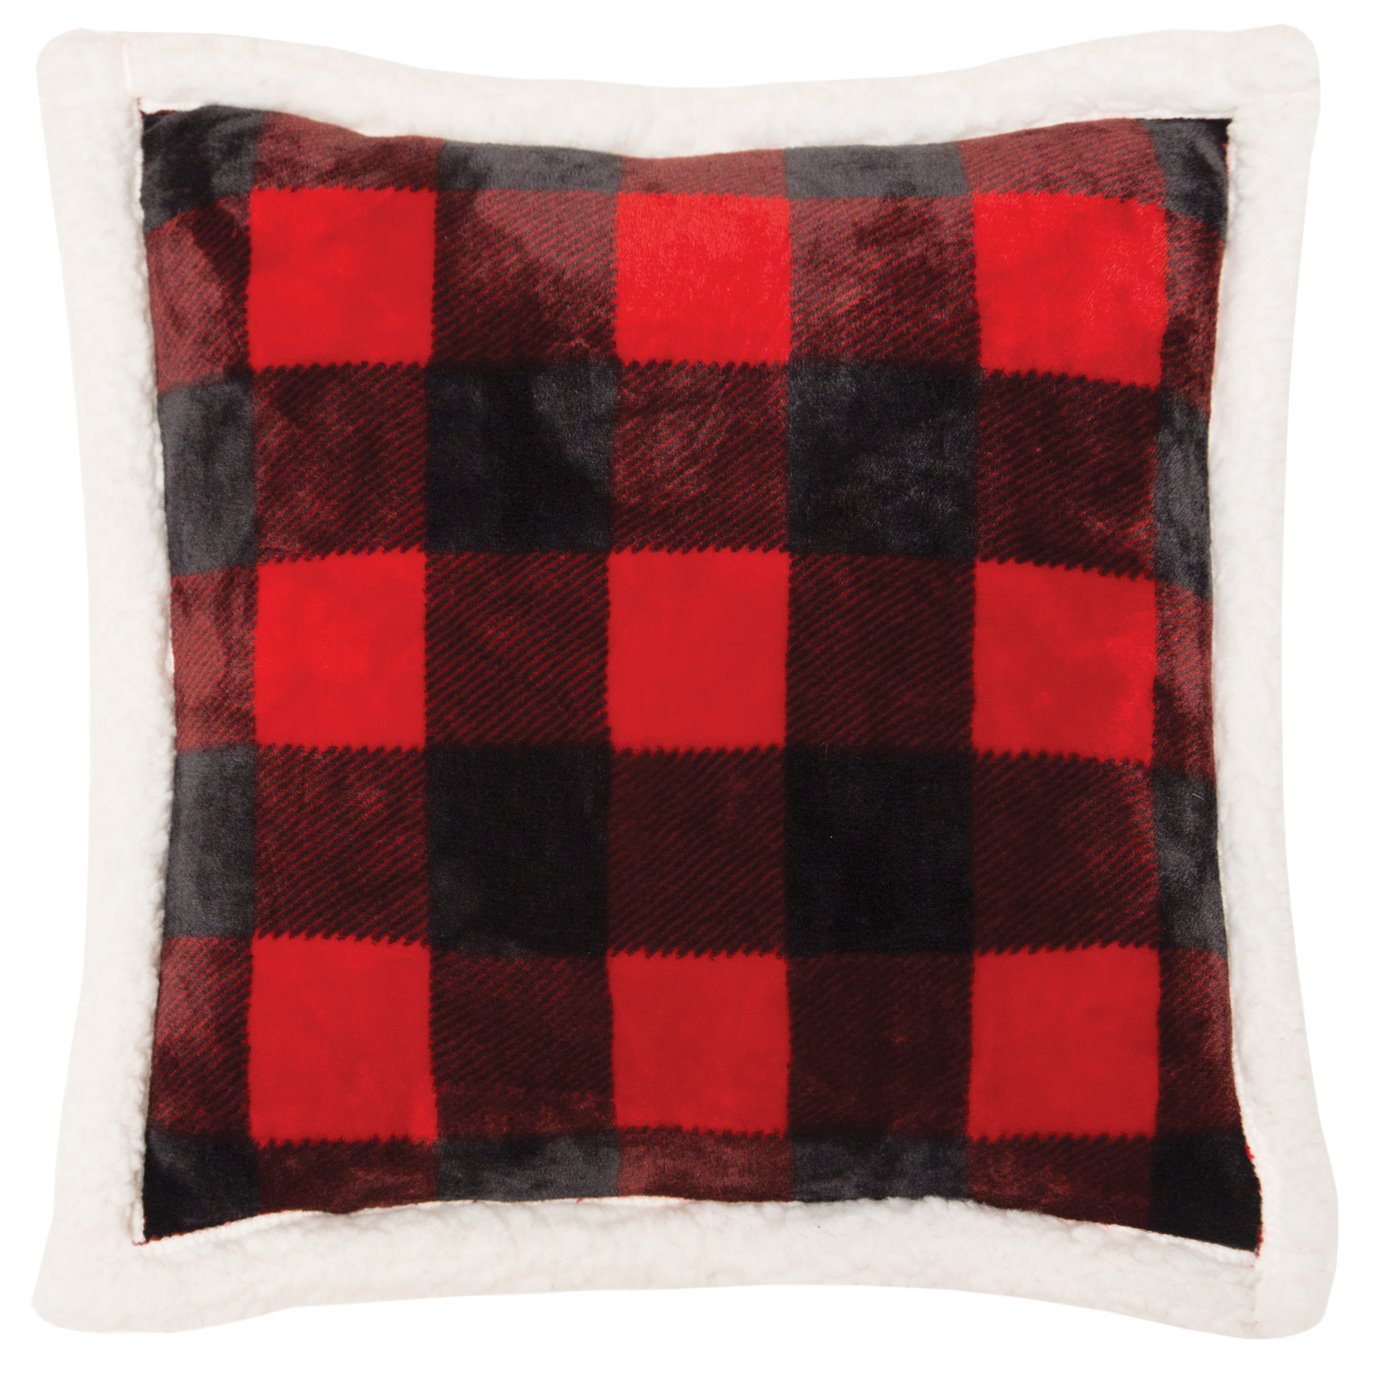 Carstens Red Lumberjack Plaid Throw Pillow 18" x 18"